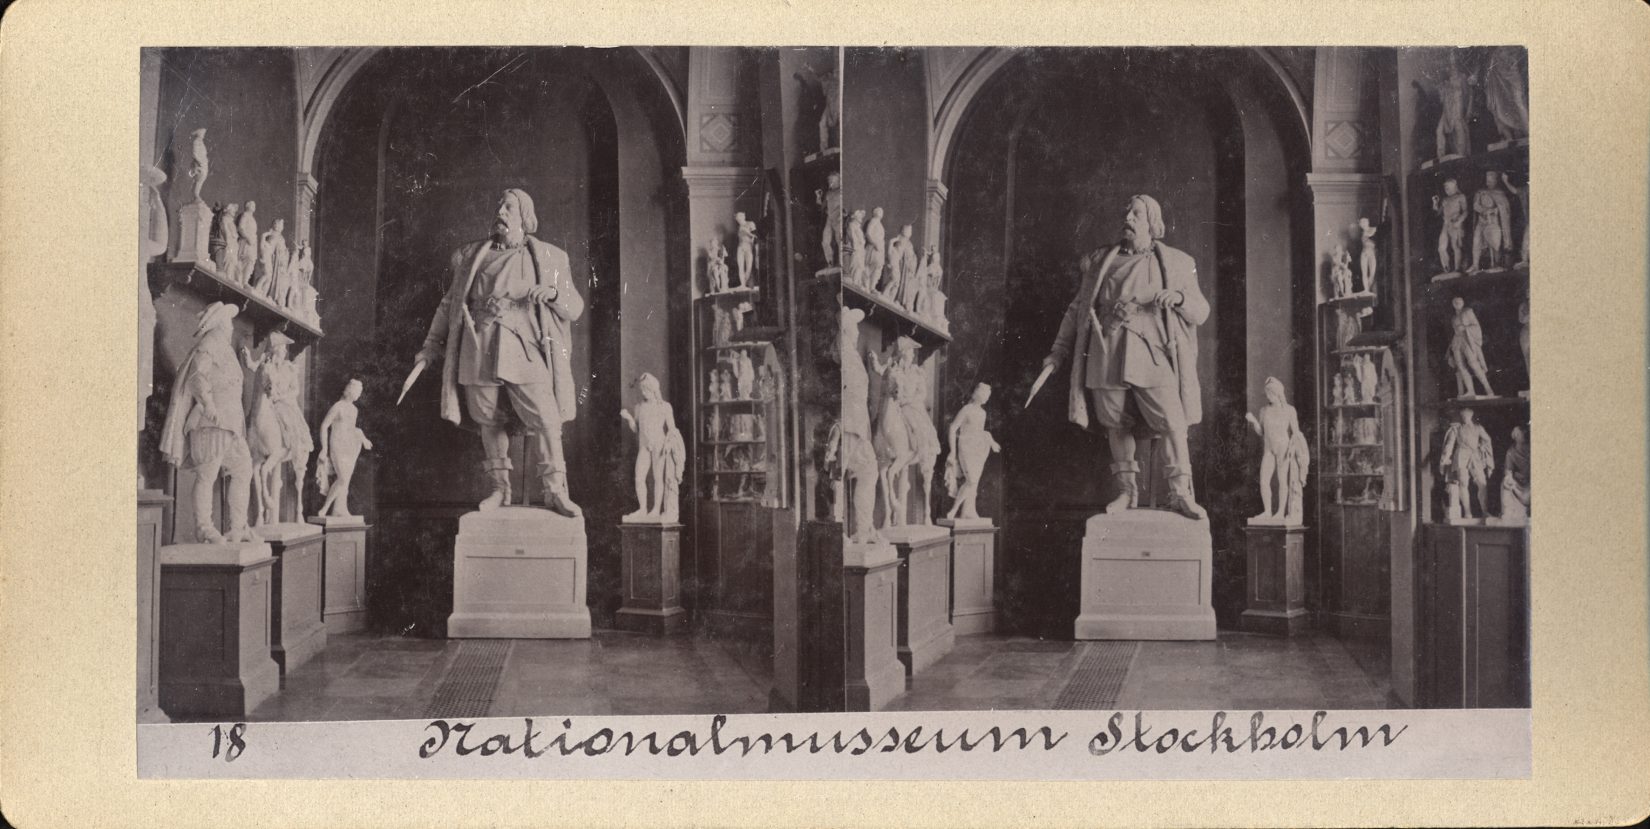 Stereoscopic photo of statues from Nationalmuseum Stockholm. Tekniska Museet/Europeana.